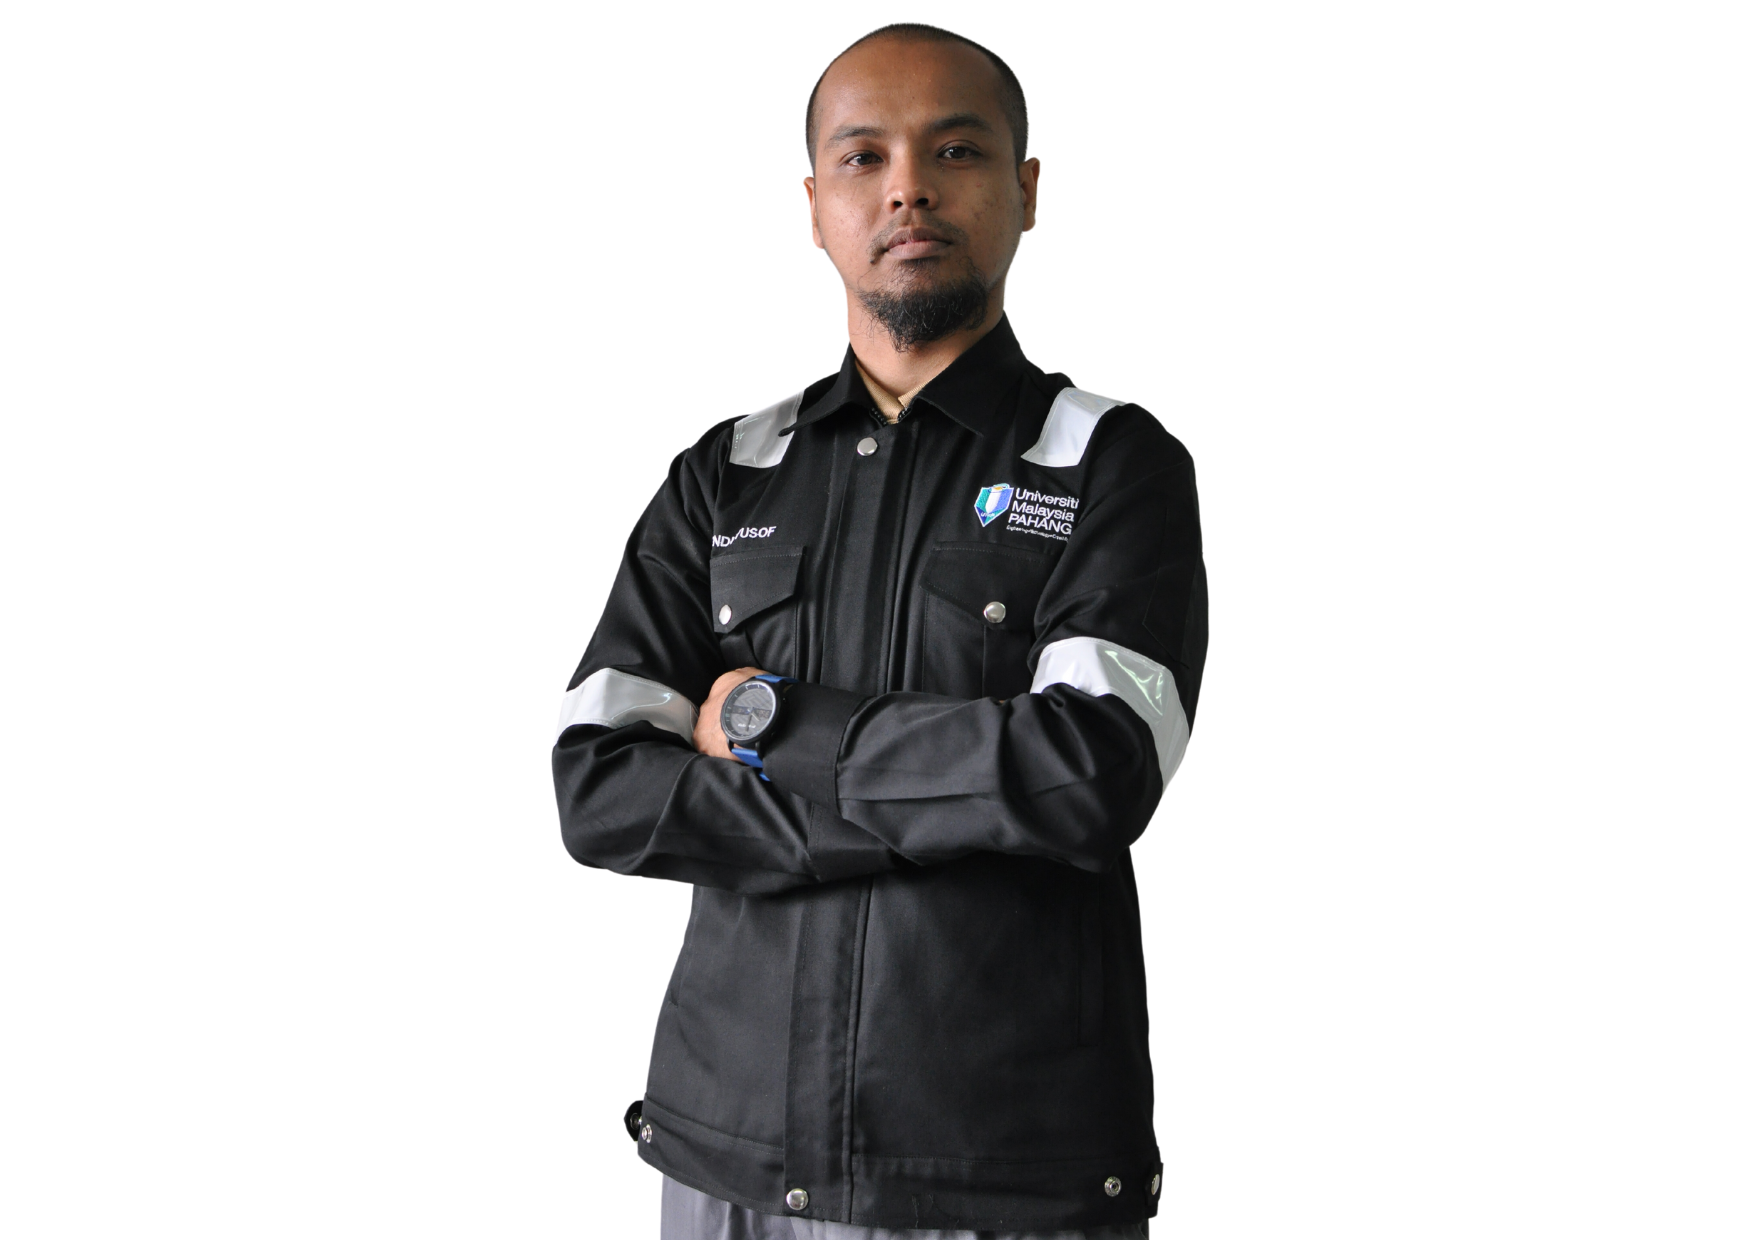 Mr. Khairul Affendi bin Yusof